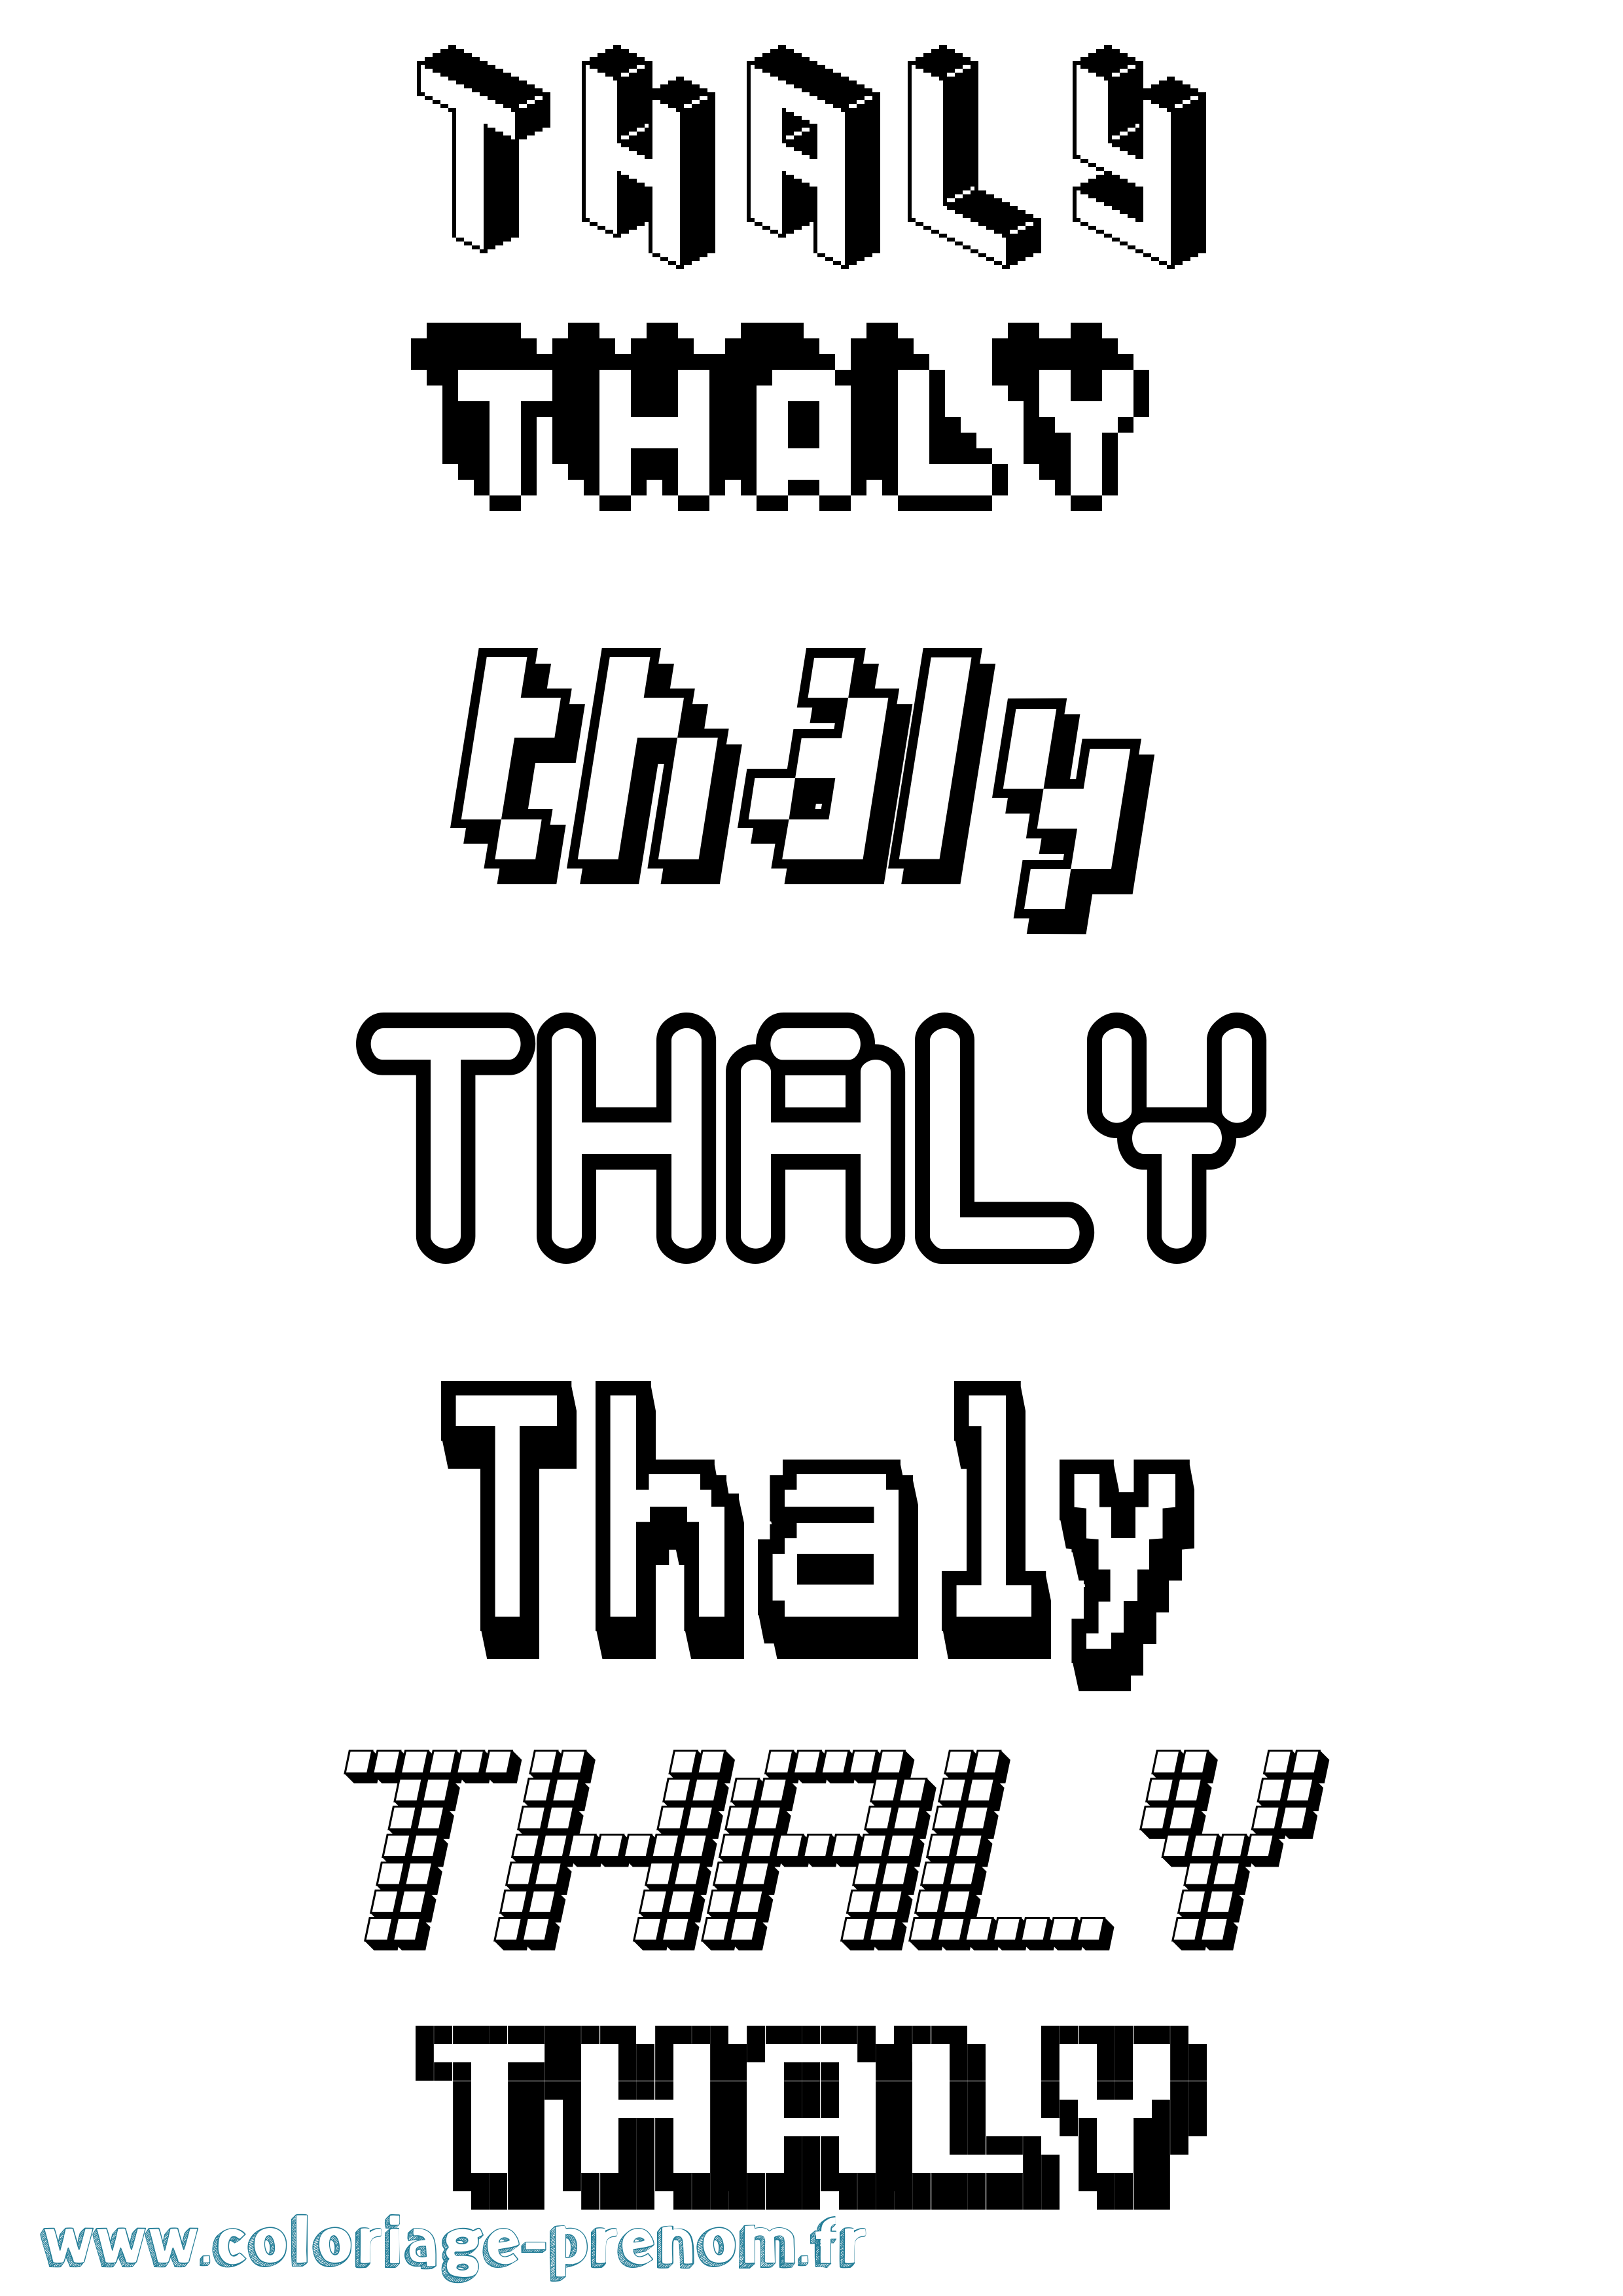 Coloriage prénom Thaly Pixel